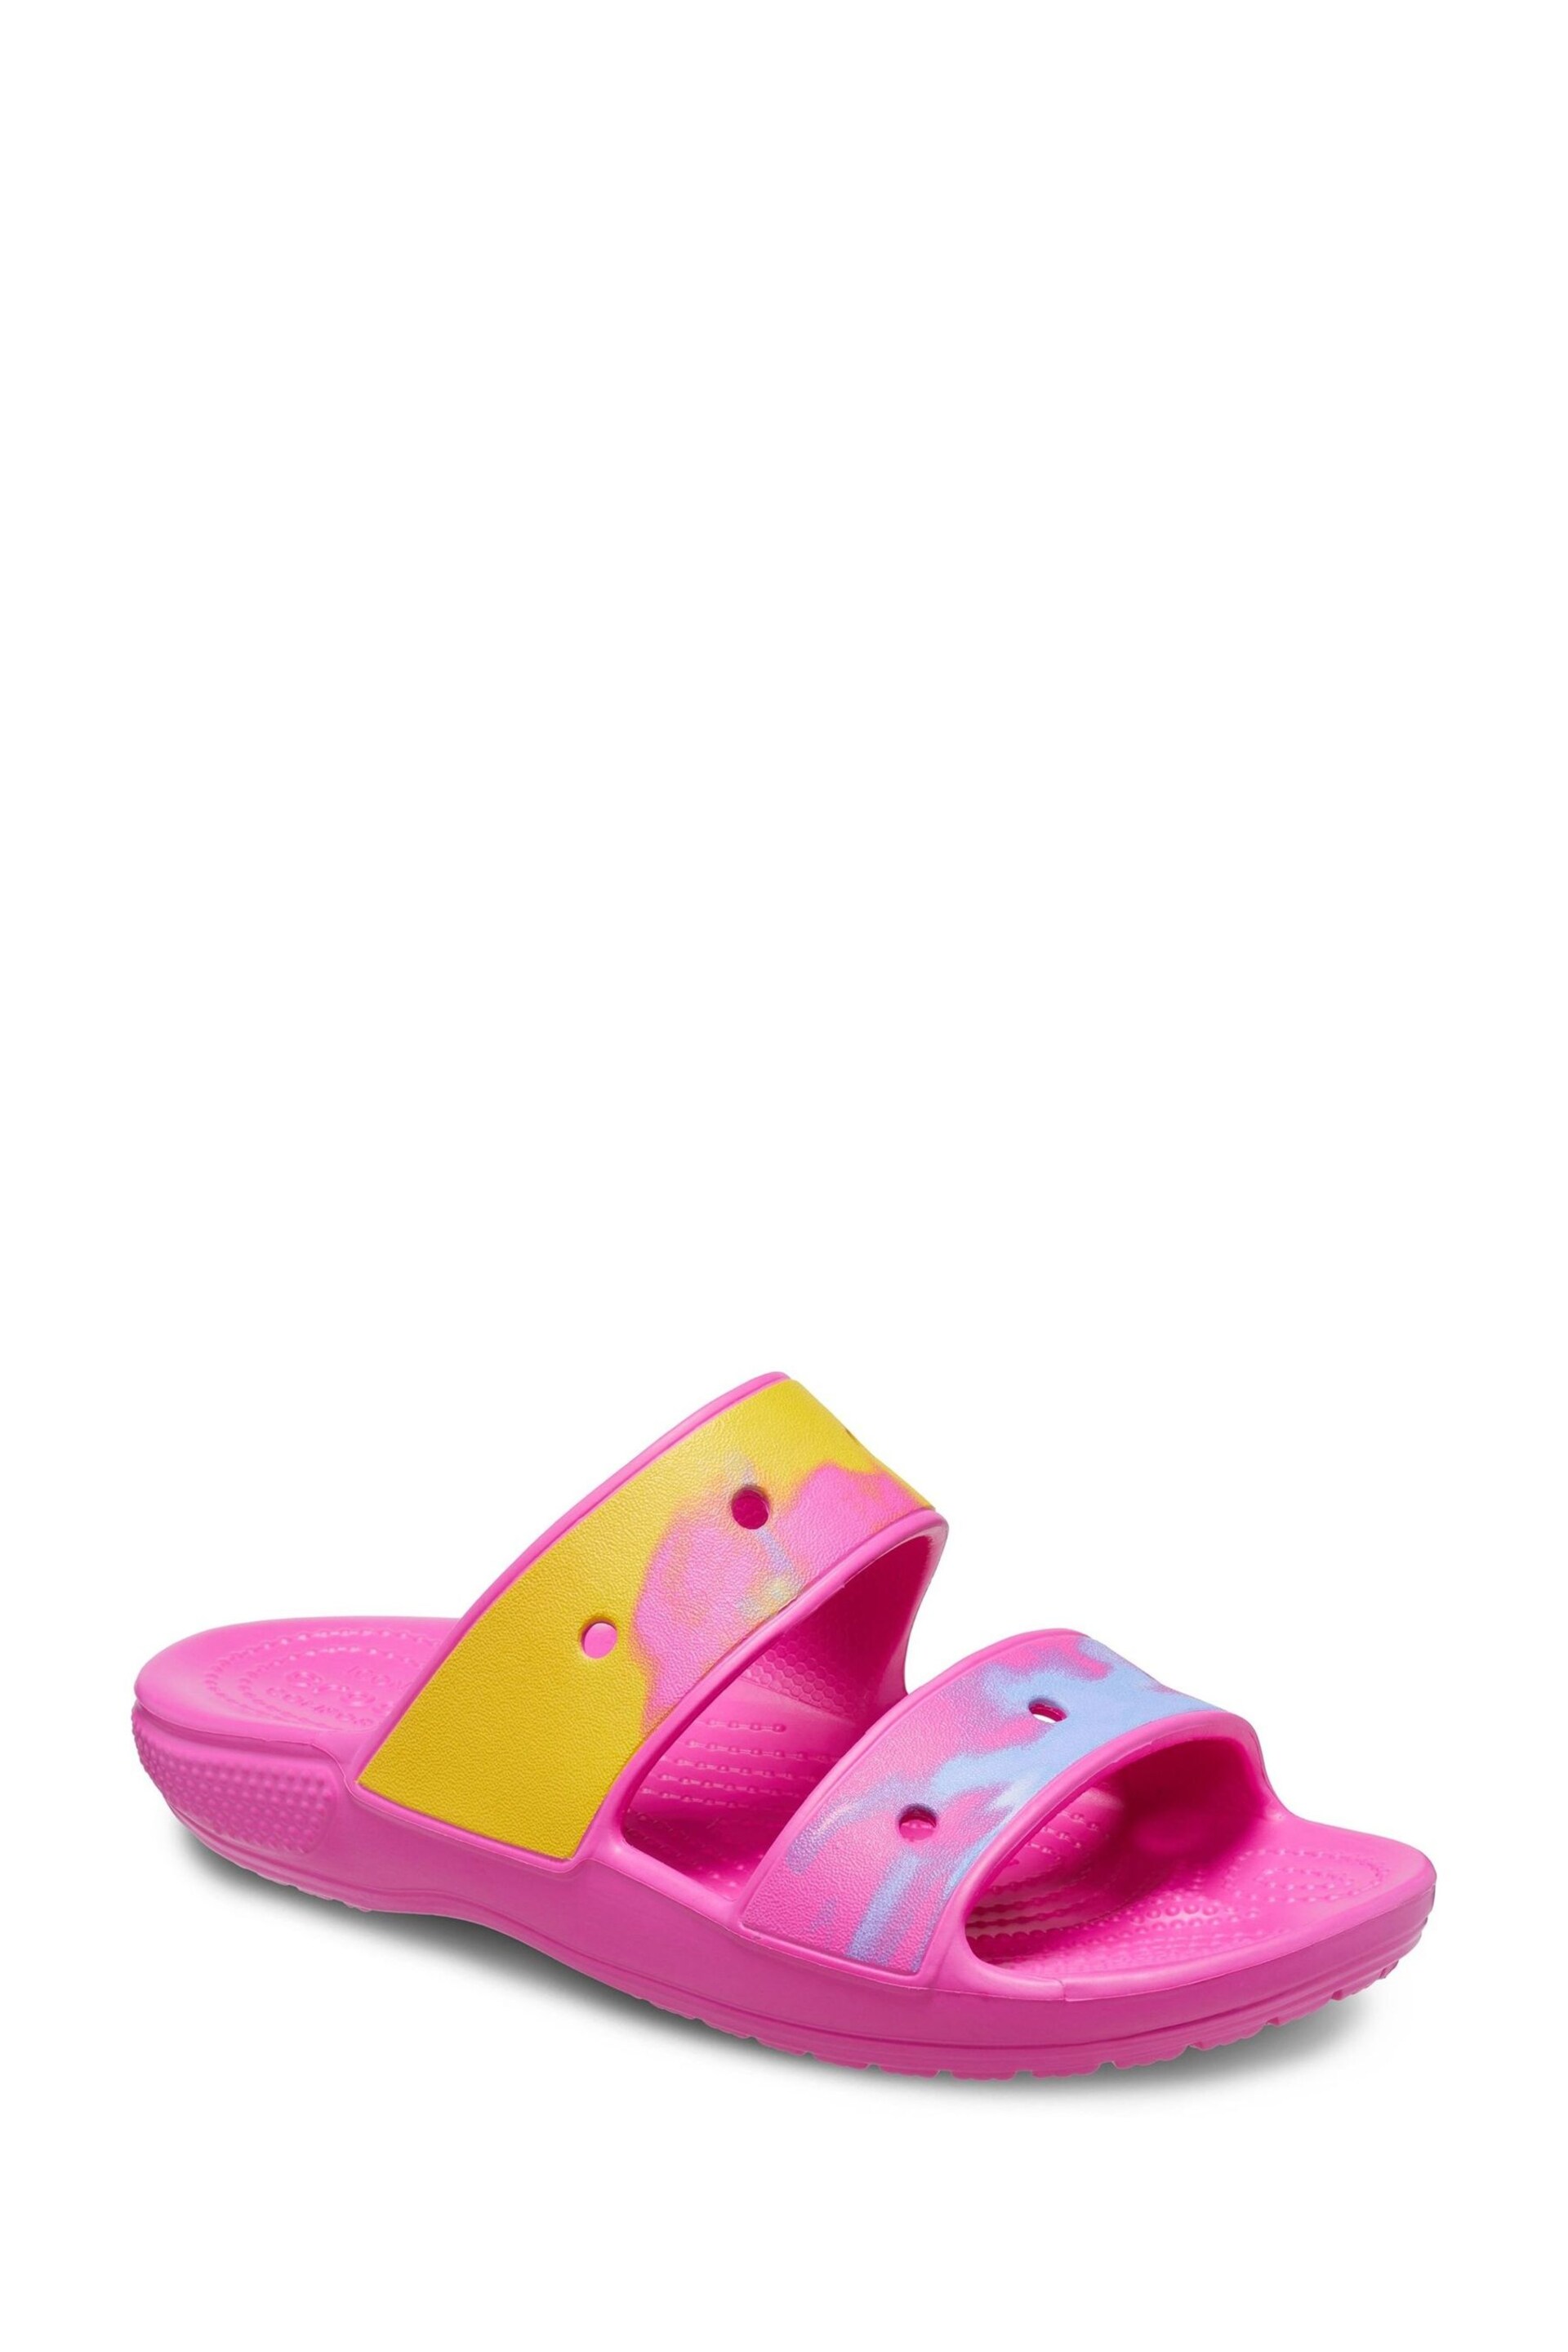 Crocs Pink Classic Ombre Sandals - Image 2 of 5